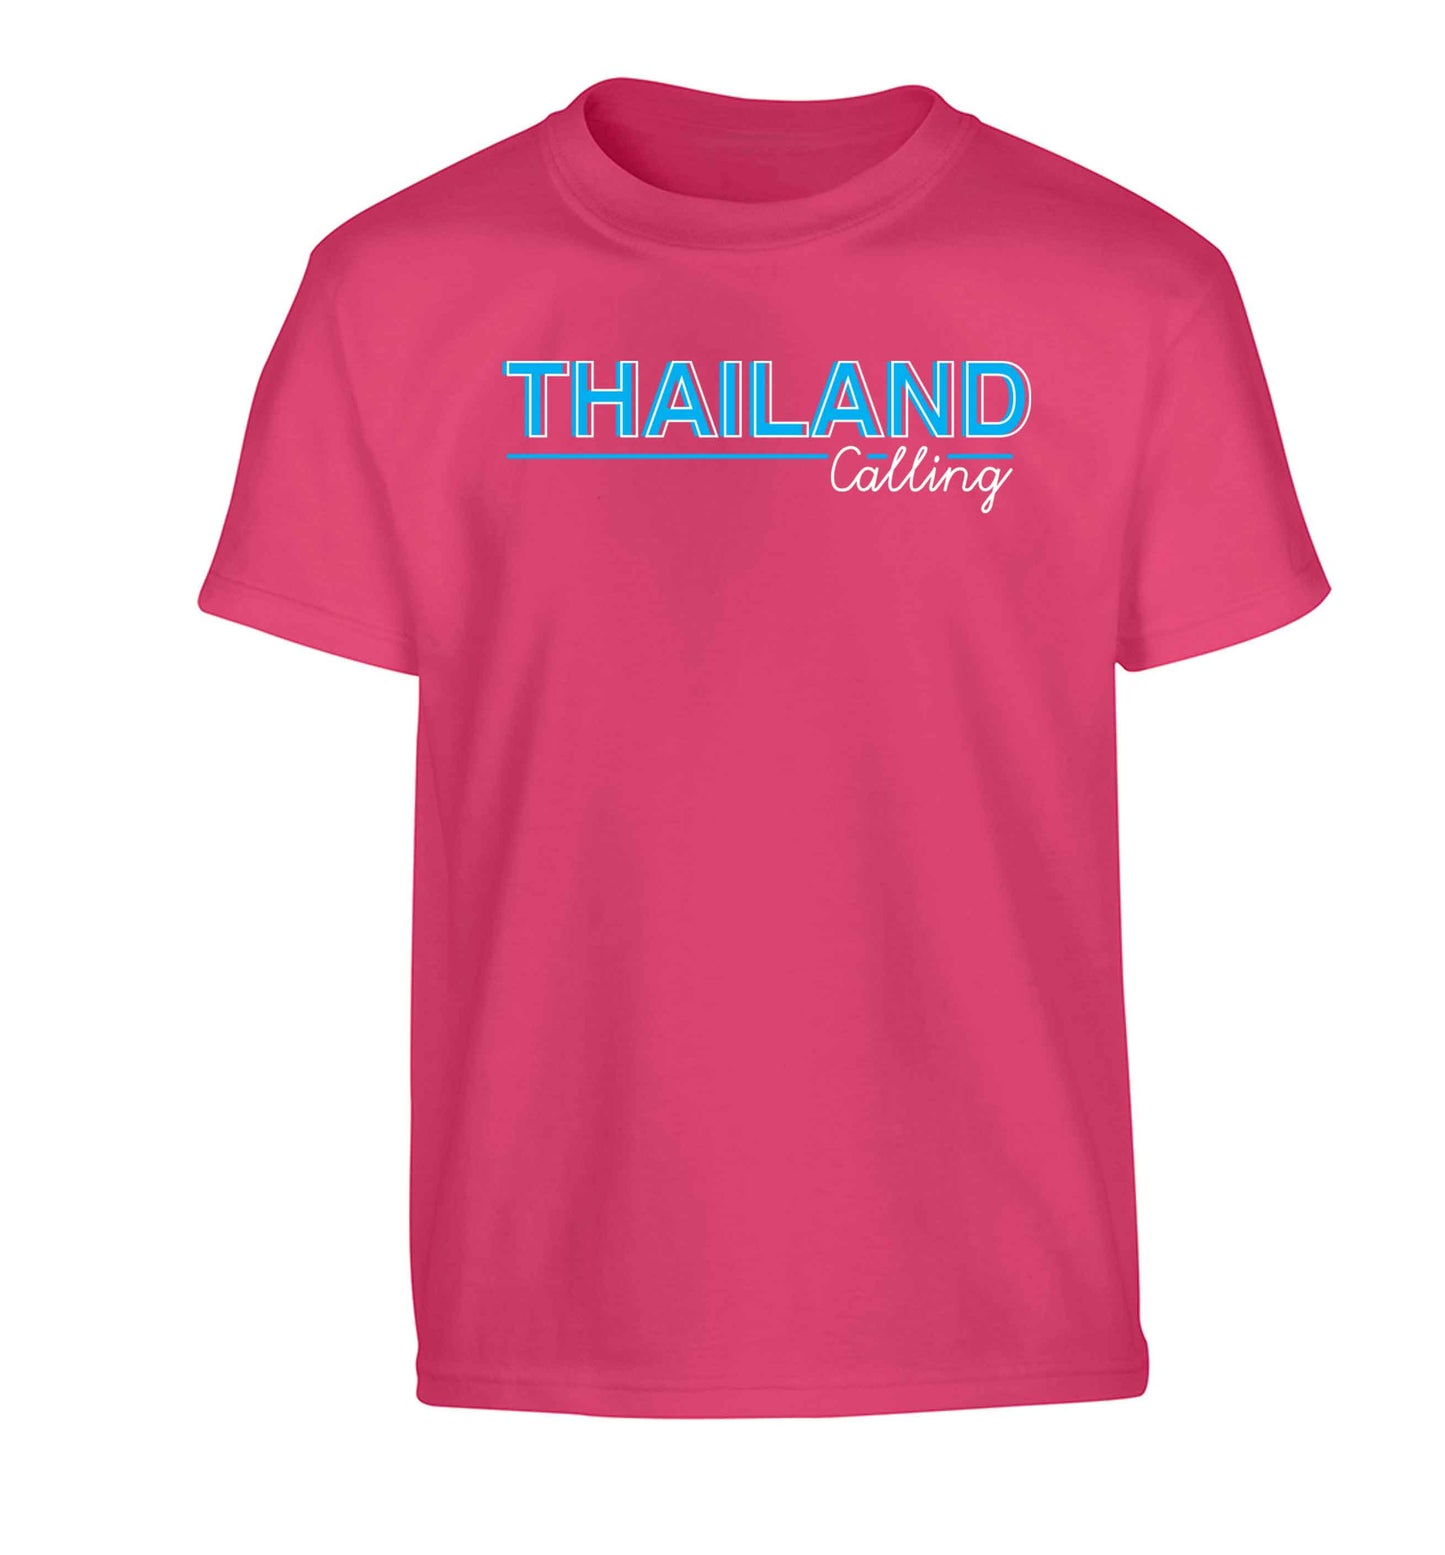 Thailand calling Children's pink Tshirt 12-13 Years